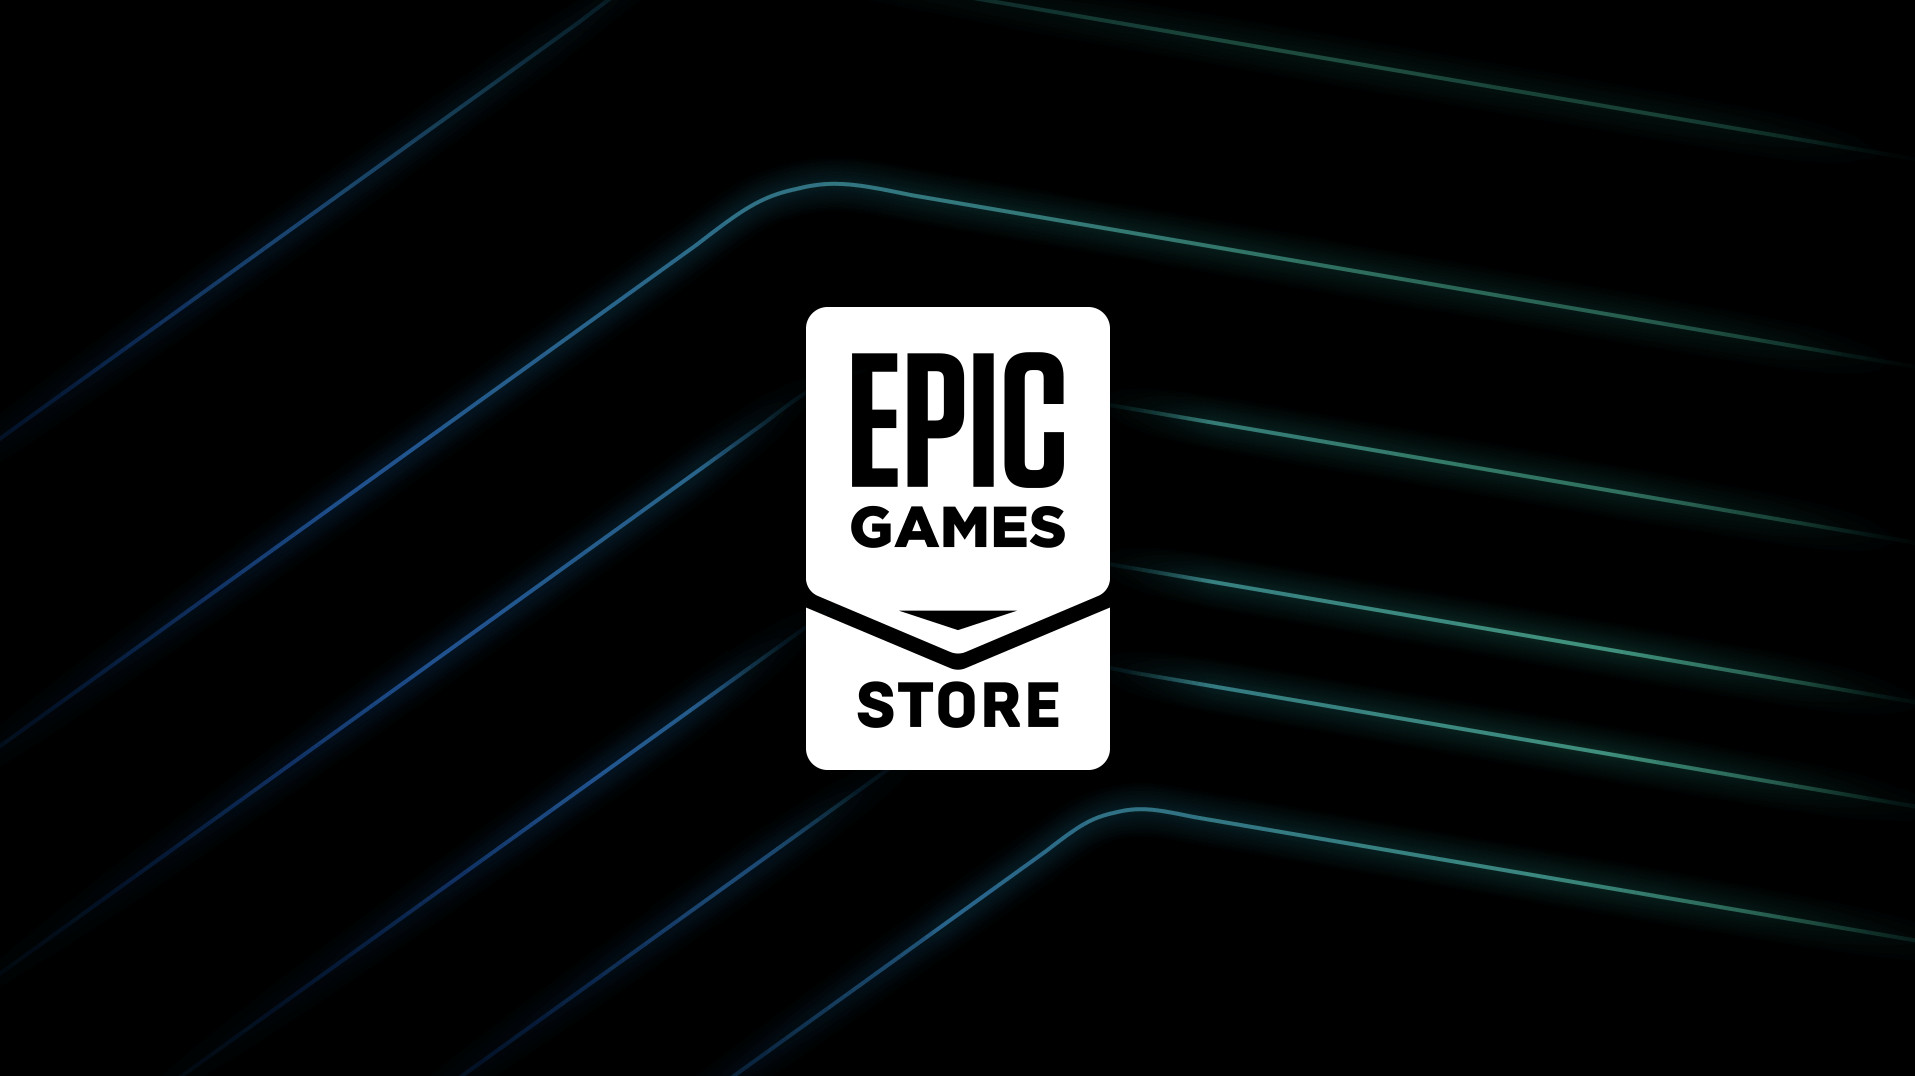 Epic商城用户现已超过1.6亿 2020年送出103款游戏